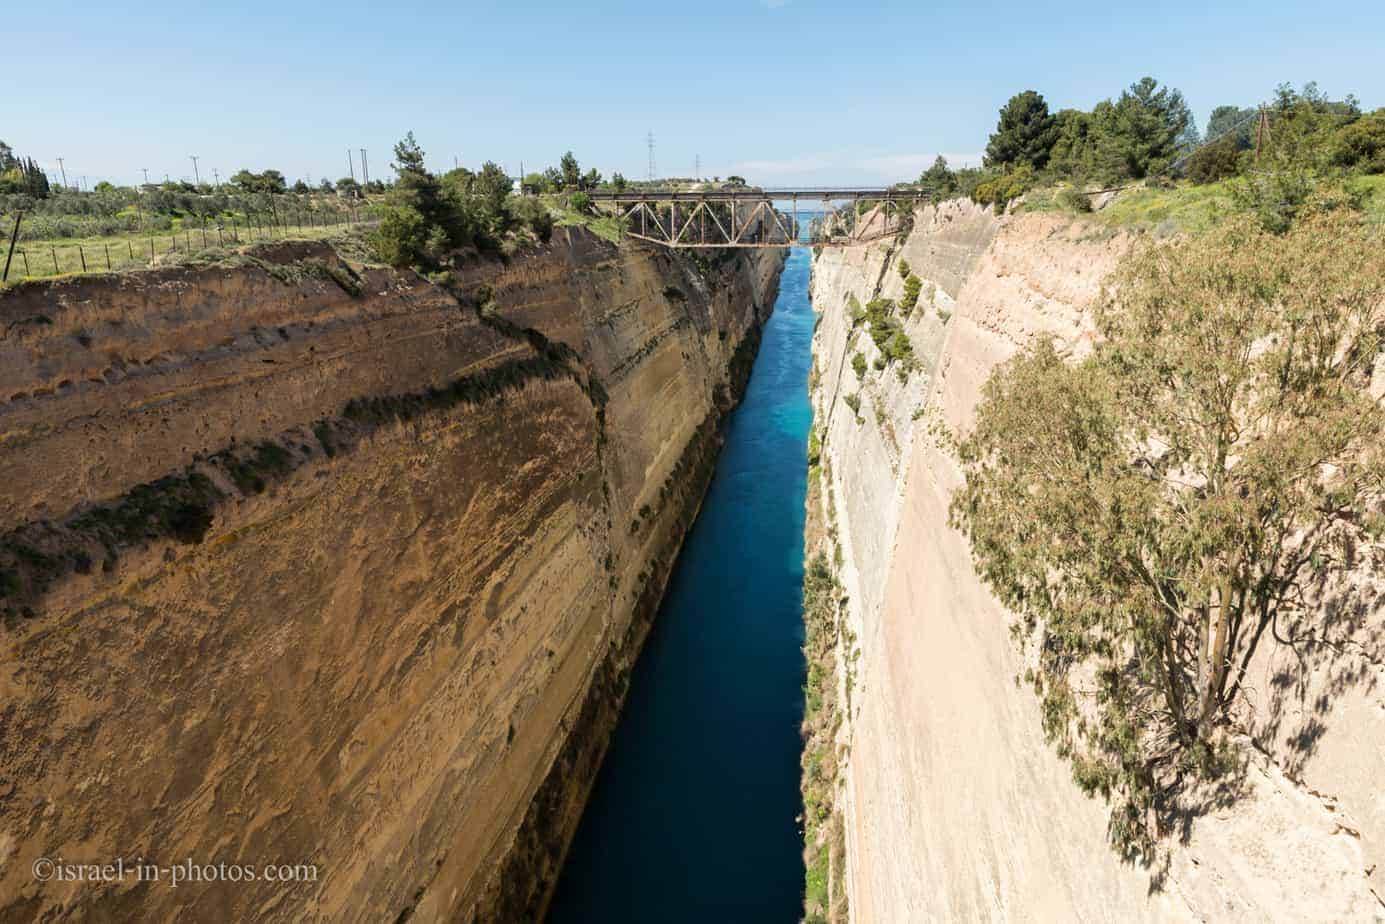 Corinth Canal in Greece, Europe